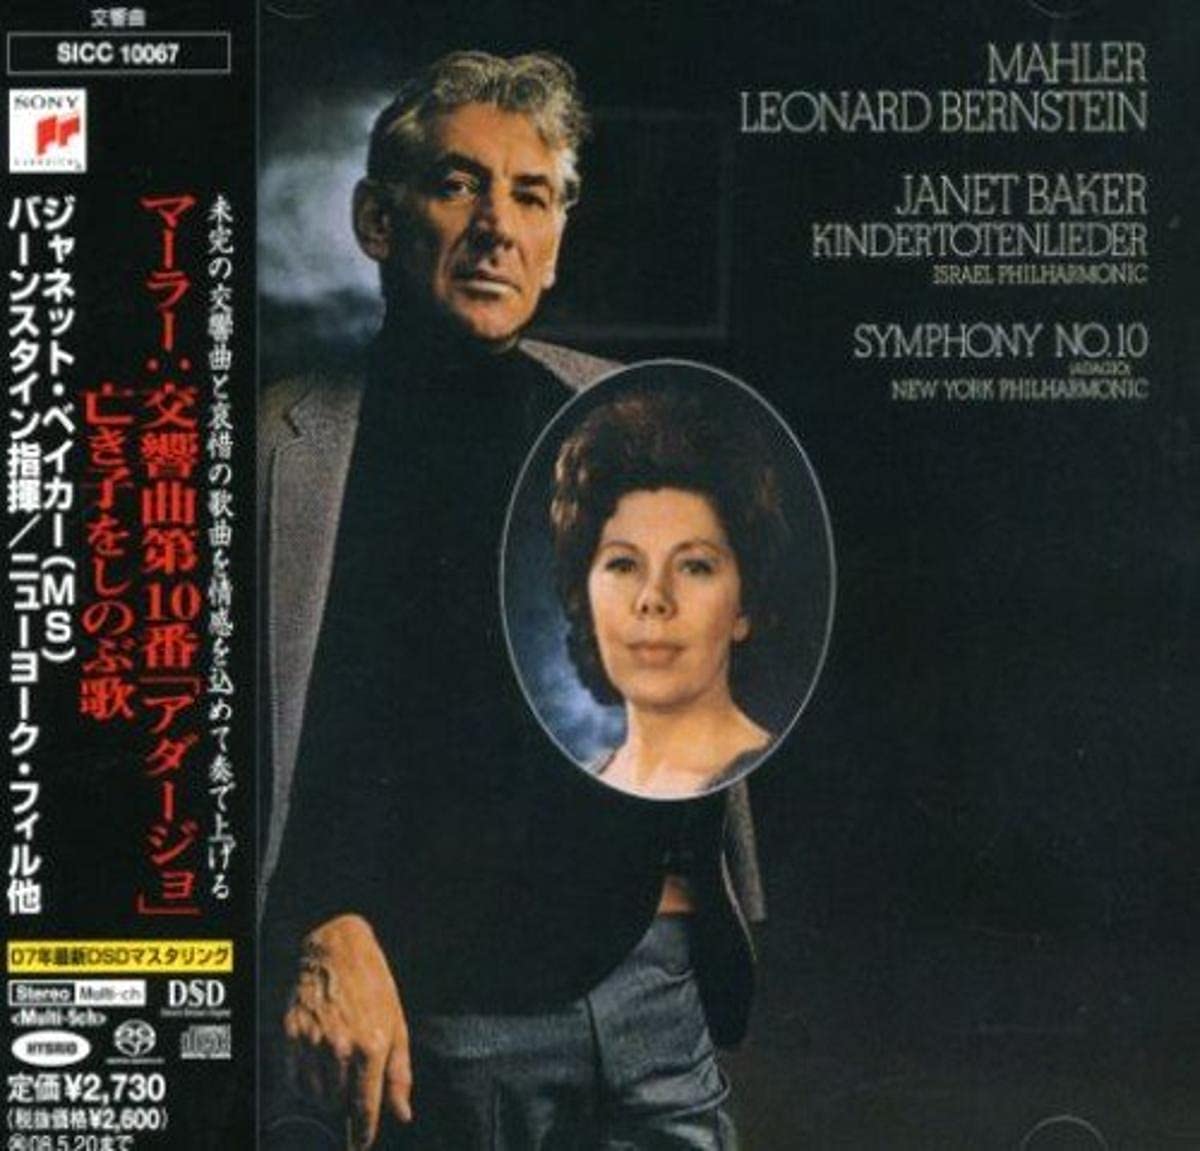 Leonard Bernstein, New York Philharmonic, Israel Philharmonic, Janet Baker – Mahler: Symphony No. 10 (Adagio) & Kindertotenlieder (2007) MCH SACD ISO + Hi-Res FLAC